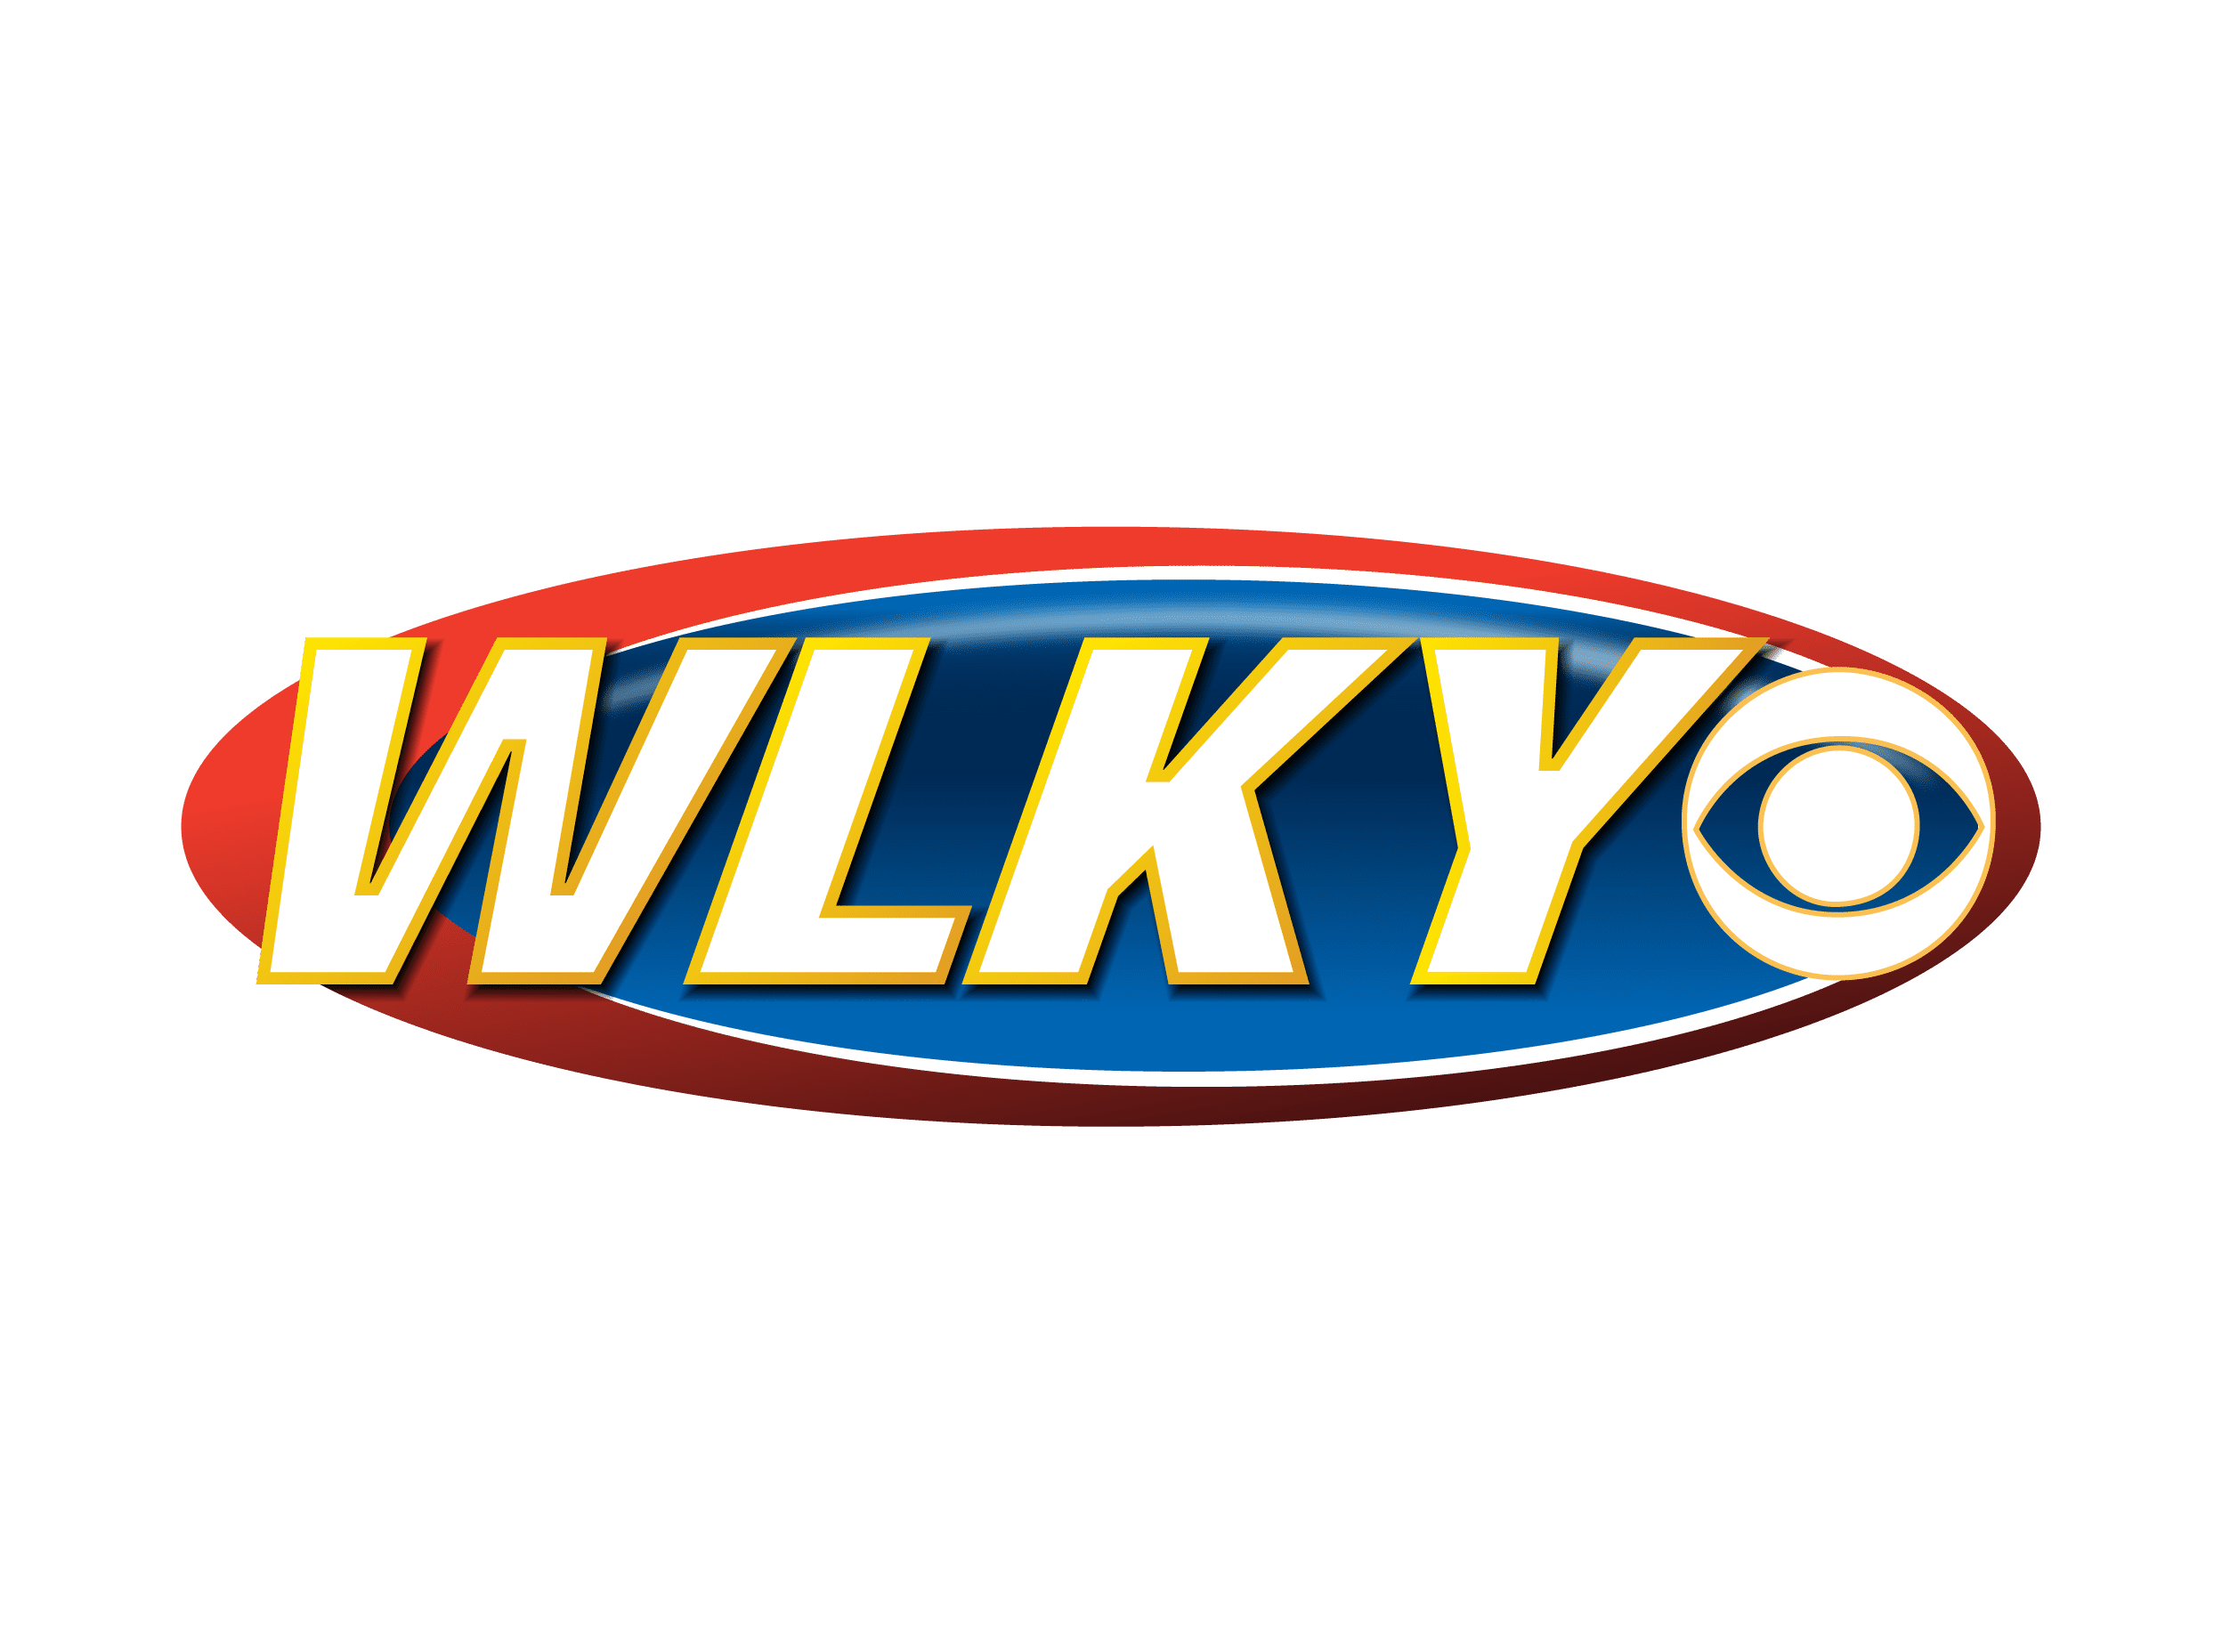 WLKY CBS Station logo